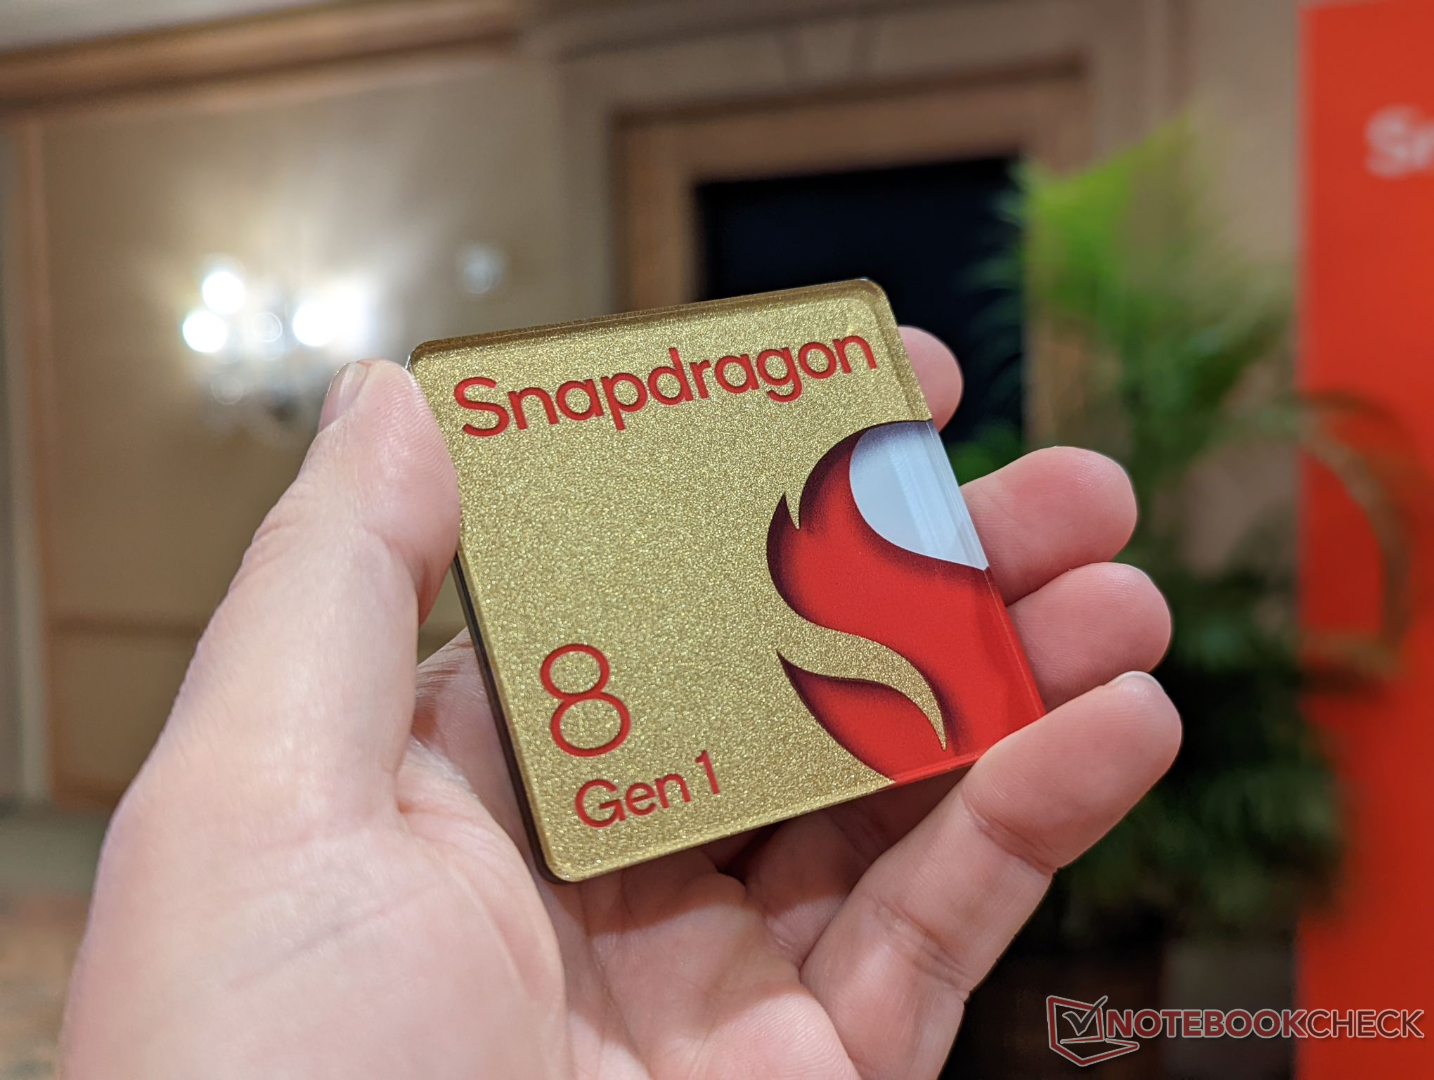 De daadwerkelijke Blanco verteren Qualcomm announces the Snapdragon 8 Gen 1 on a 4 nm node with 20% CPU  improvements, 30% greater power efficiency and 30% higher GPU performance  than the Snapdragon 888 - NotebookCheck.net News